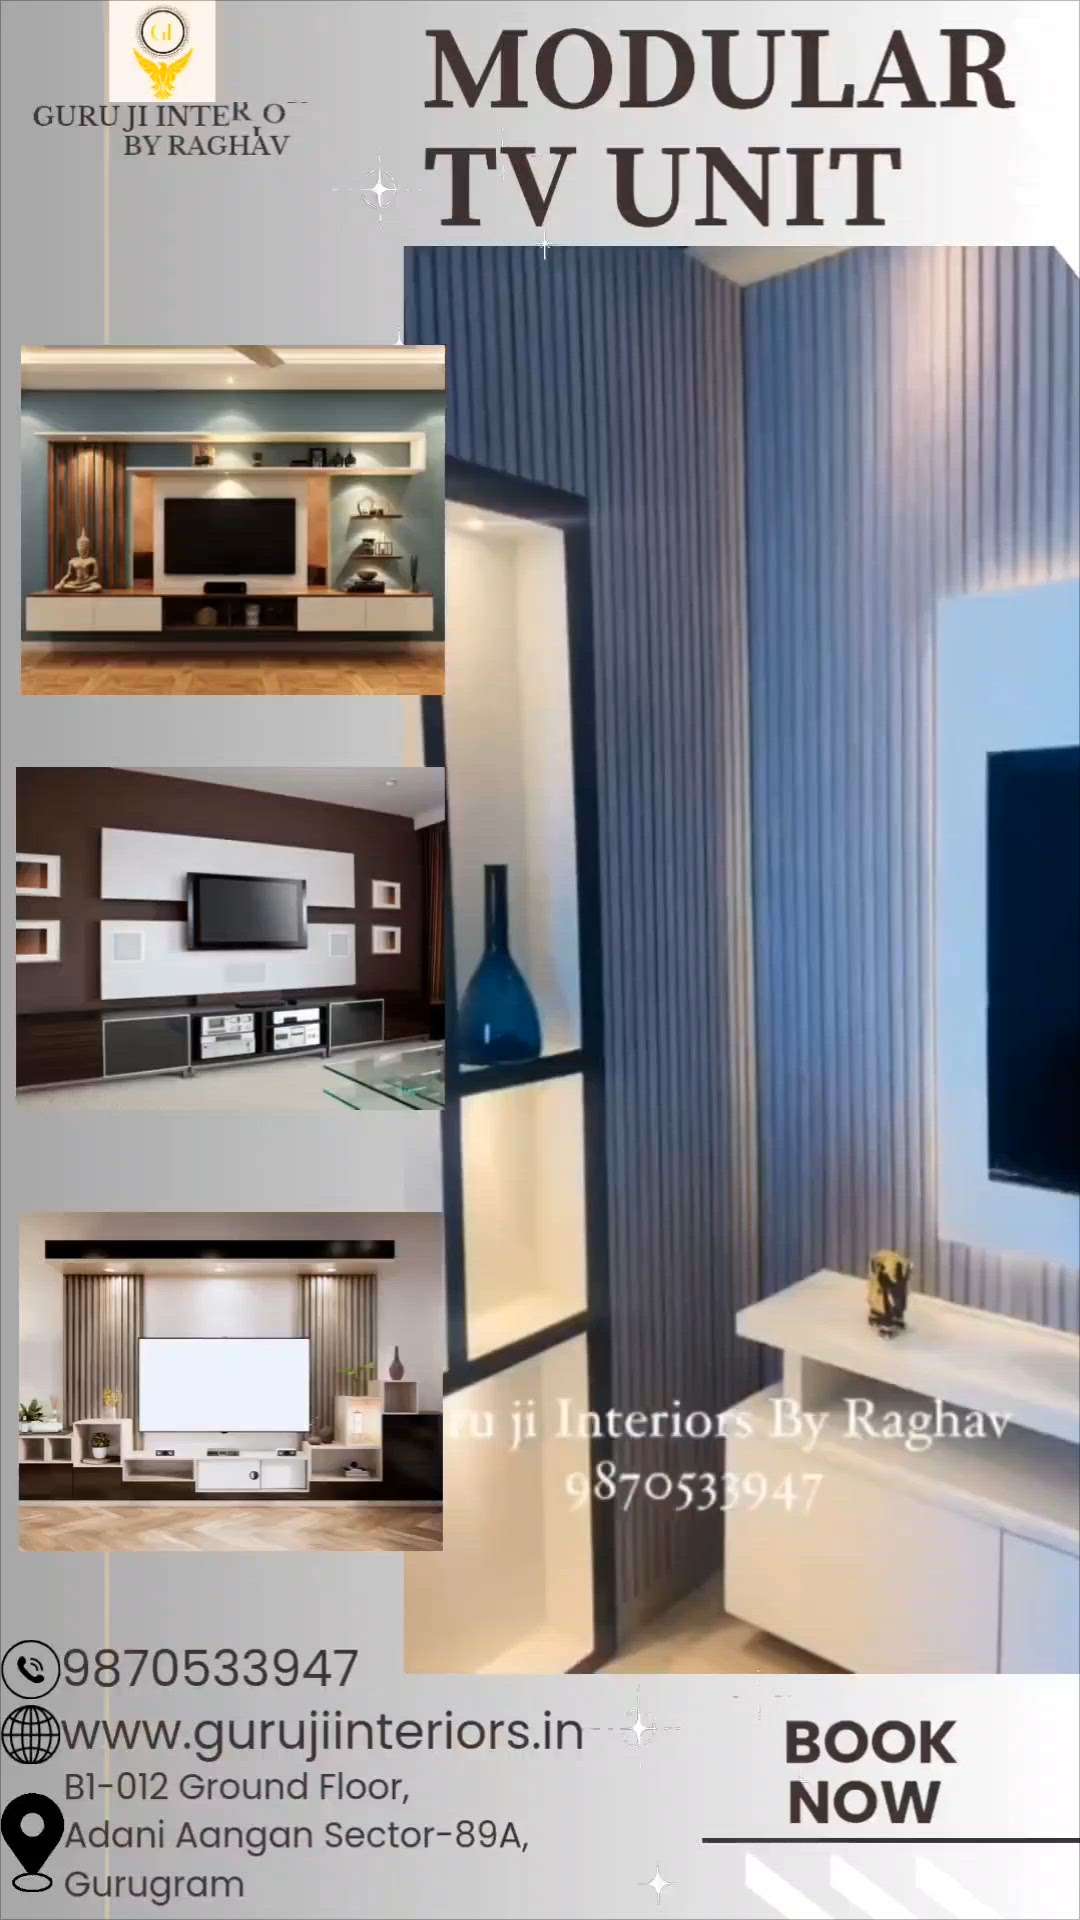 MODULAR TV UNIT DESIGN ✨
Get Lowest price &  best quality home interiors💫
.
Guru ji interiors
By Raghav
Call - 9870533947 
#gurujiinteriors
#Interiordesign 
#tvunit 
#tvpanel
#homeinterior